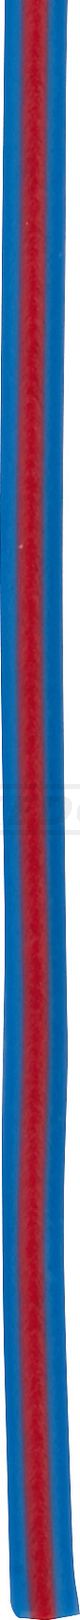 KABEL, 1 Meter 0.75qmm blau-rot (blaues Kabel mit rotem Strich)